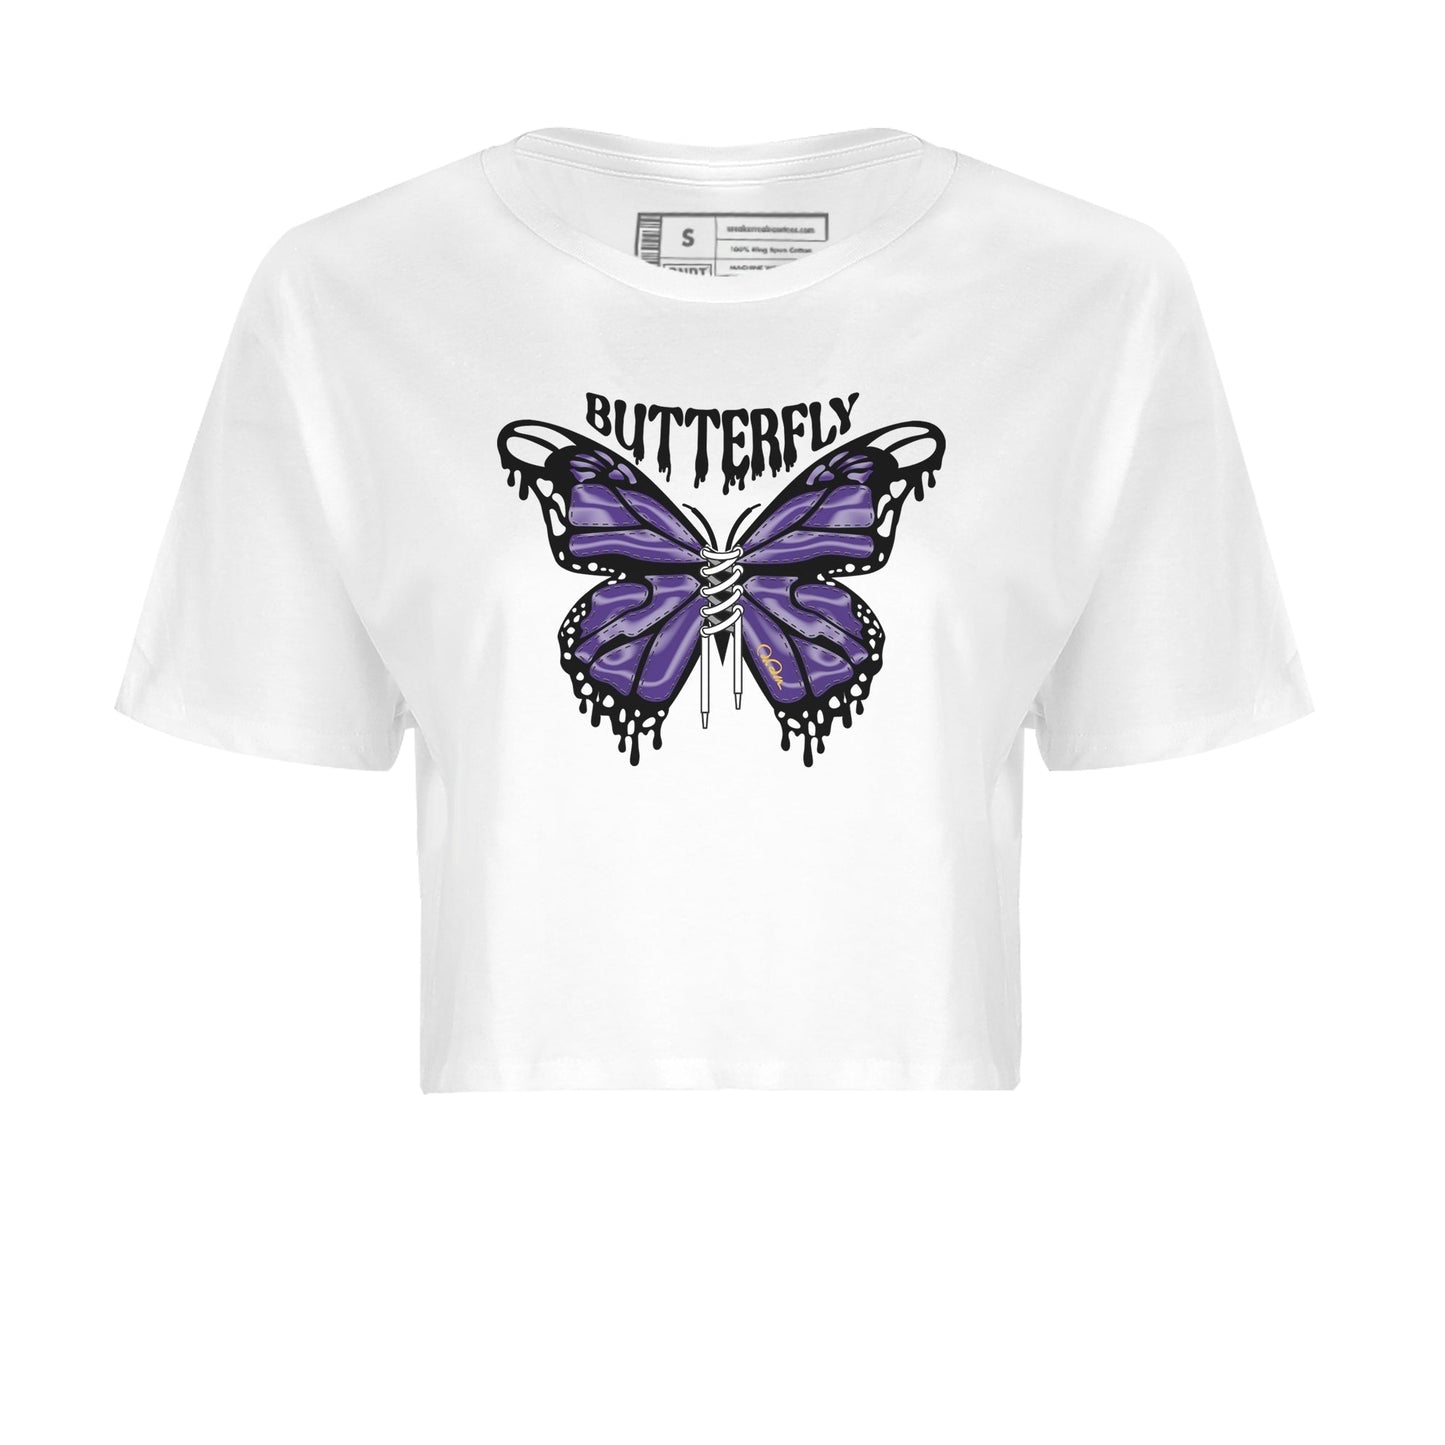 Air Jordan 12 Field Purple Sneaker Match Tees Butterfly Sneaker Tees AJ12 Field Purple Sneaker Release Tees Women's Shirts White 2